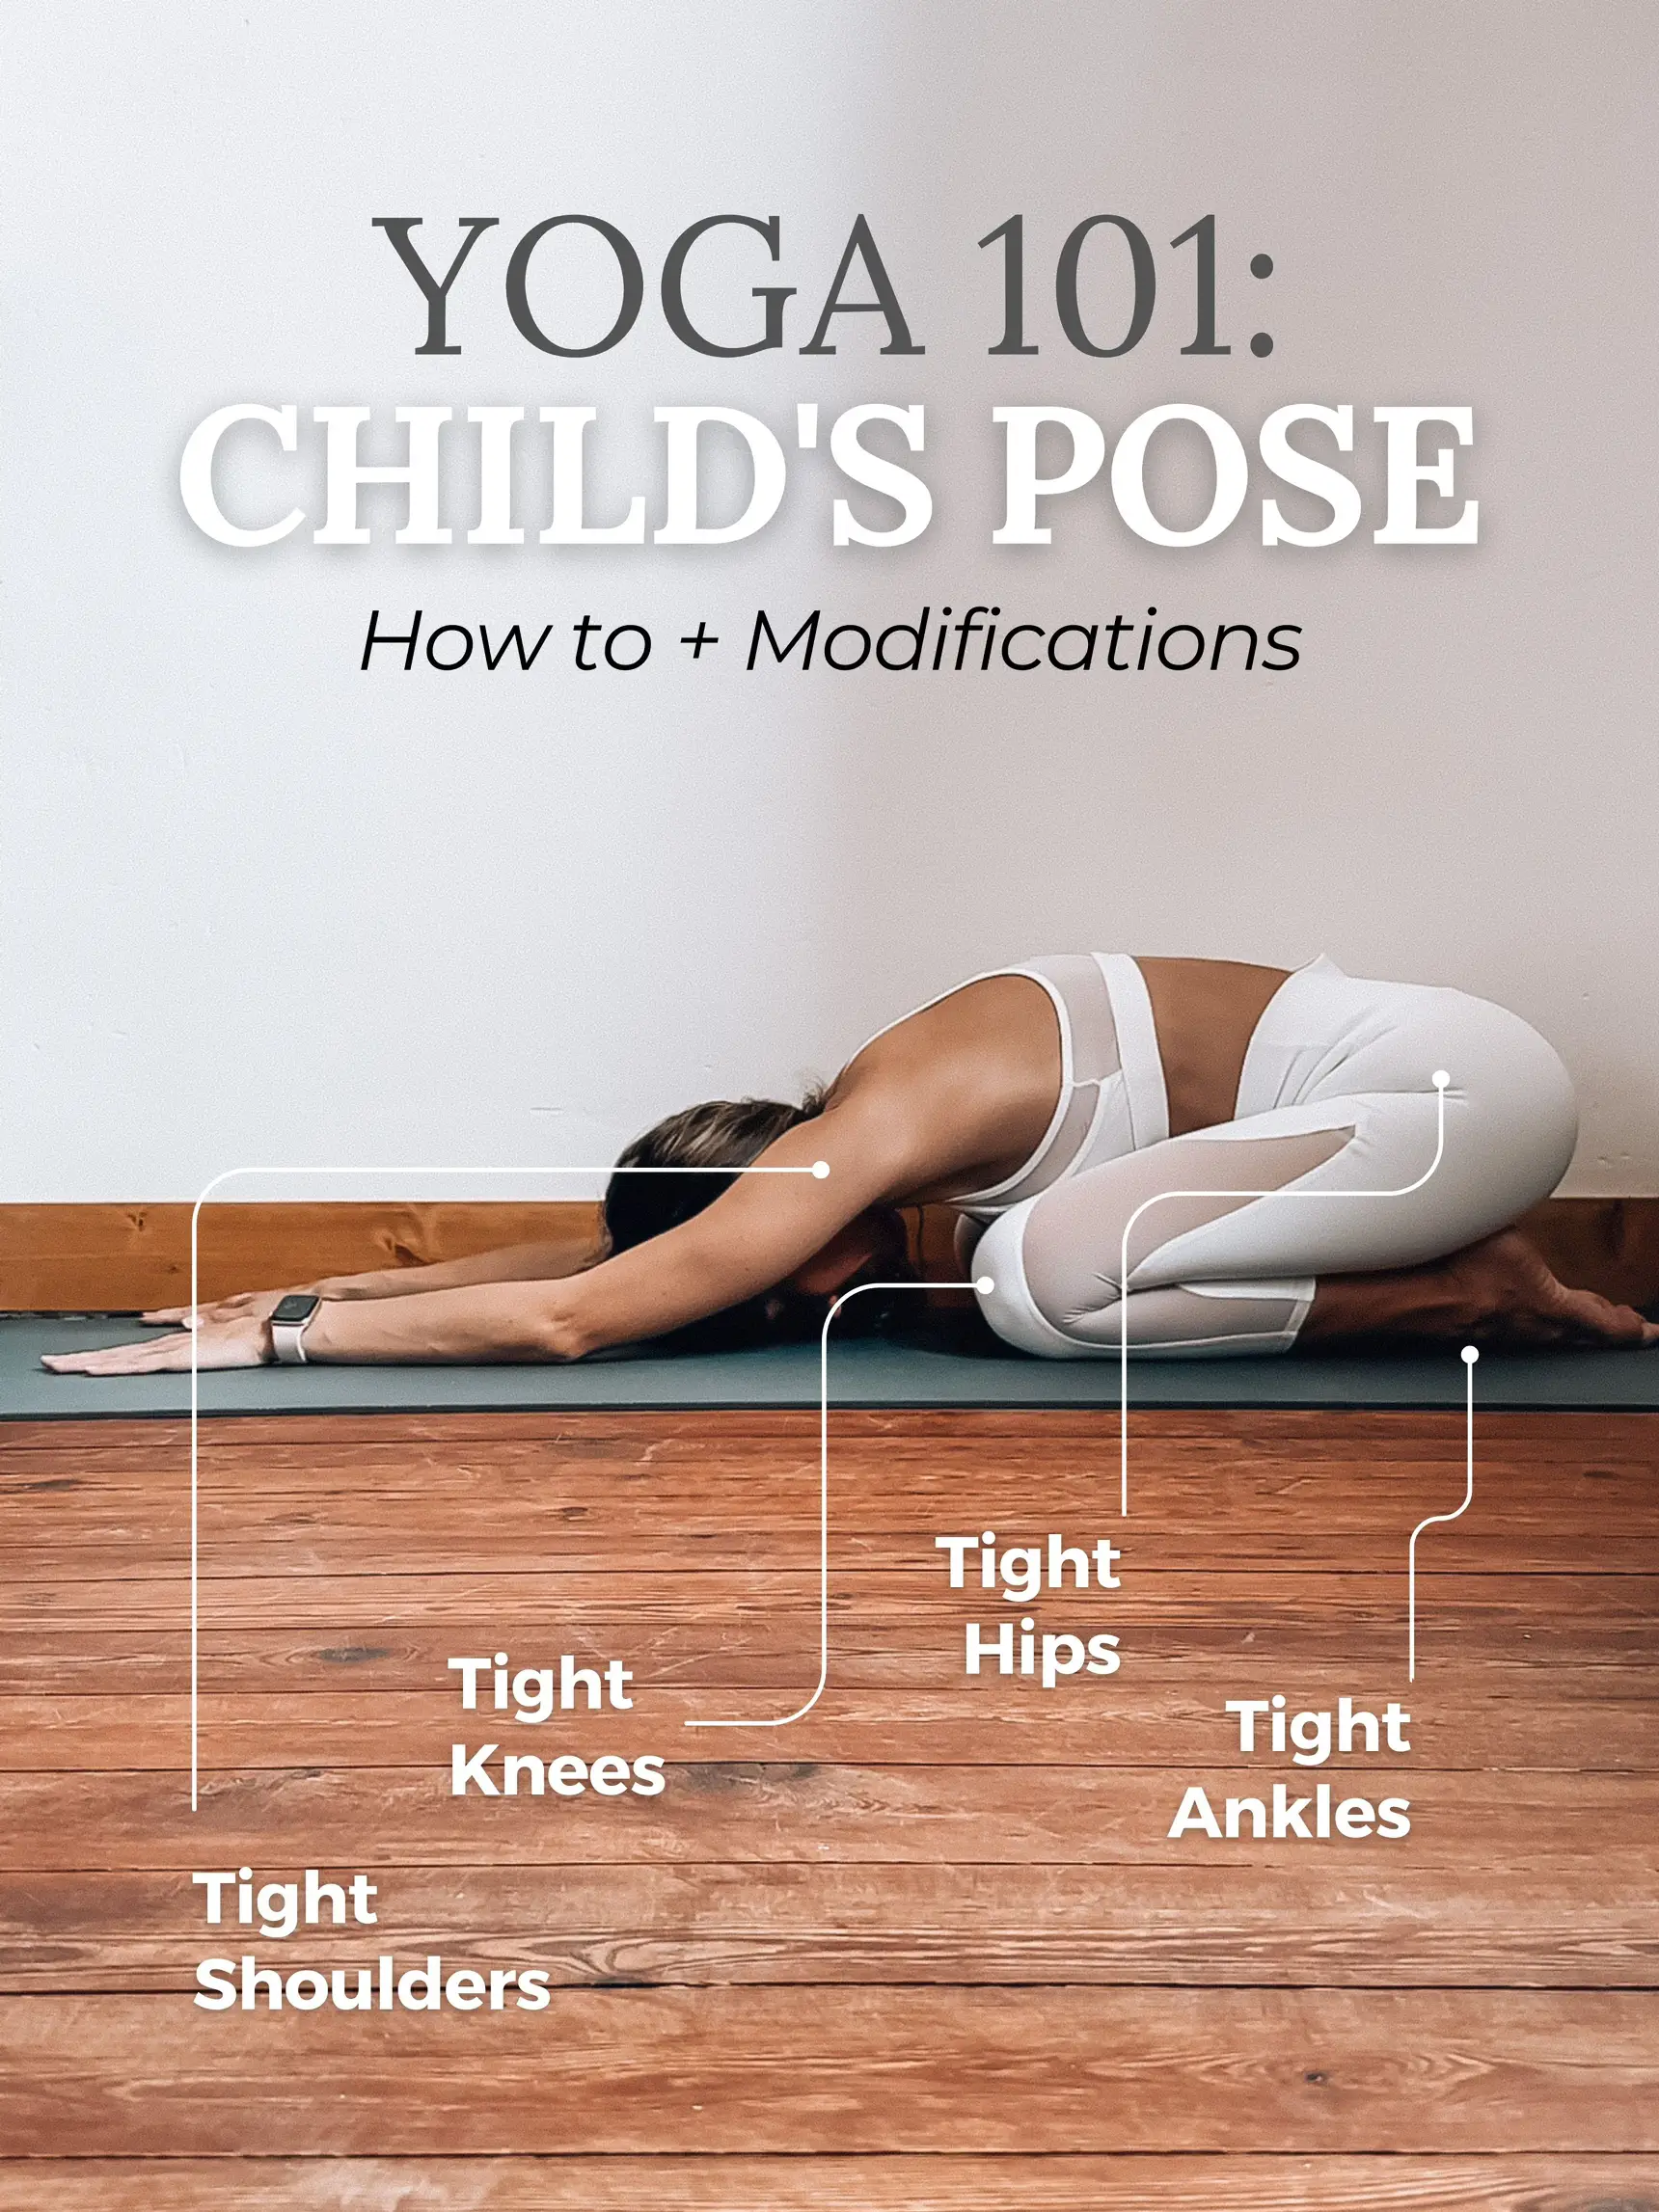 5 yoga poses for Thigh Fat Loss🧘 #yoga #fitness #meditation